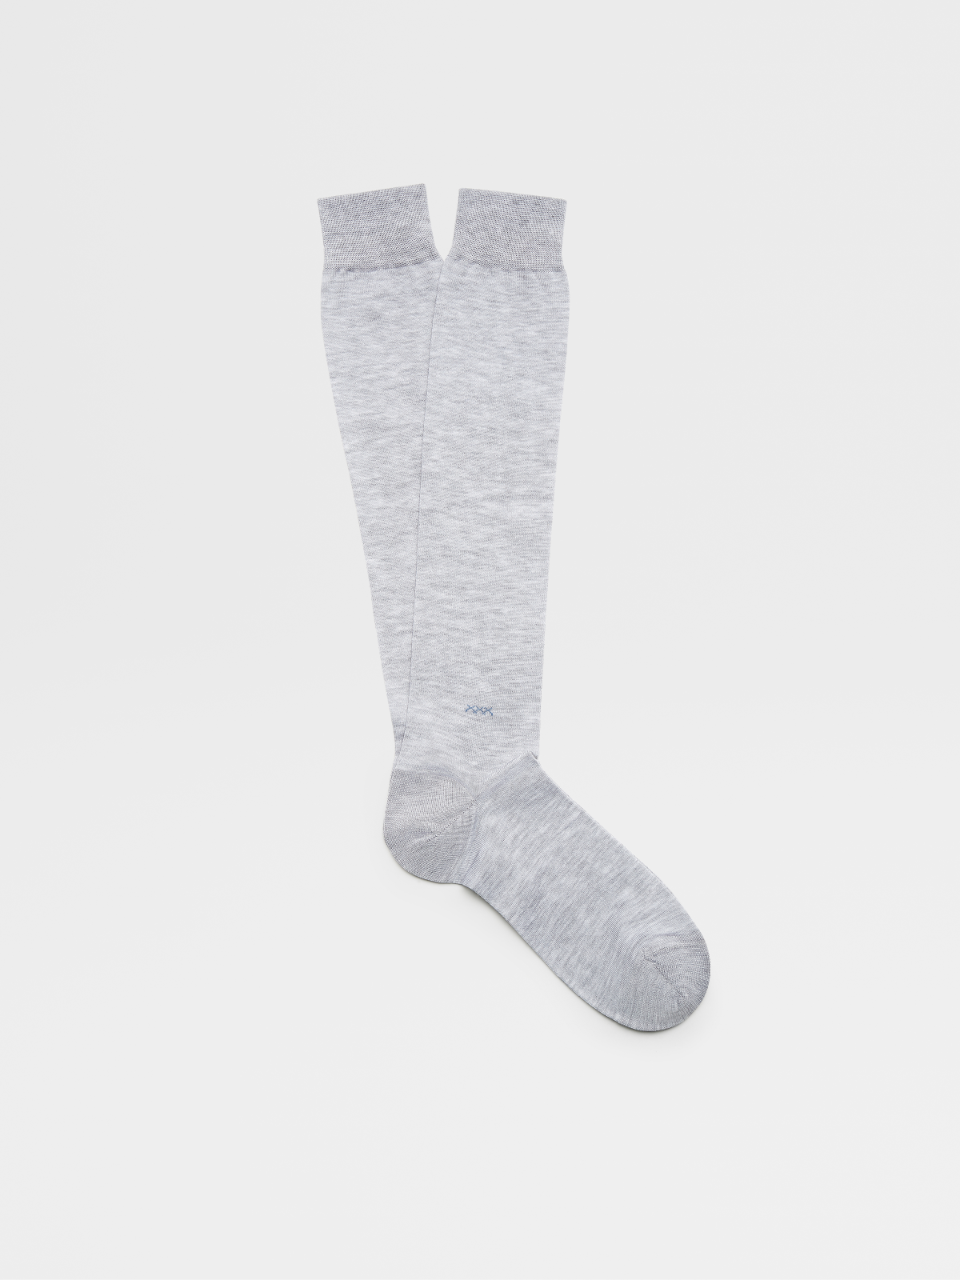 Flannel Grey Everyday Triple X Cotton Blend Mid Calf Socks